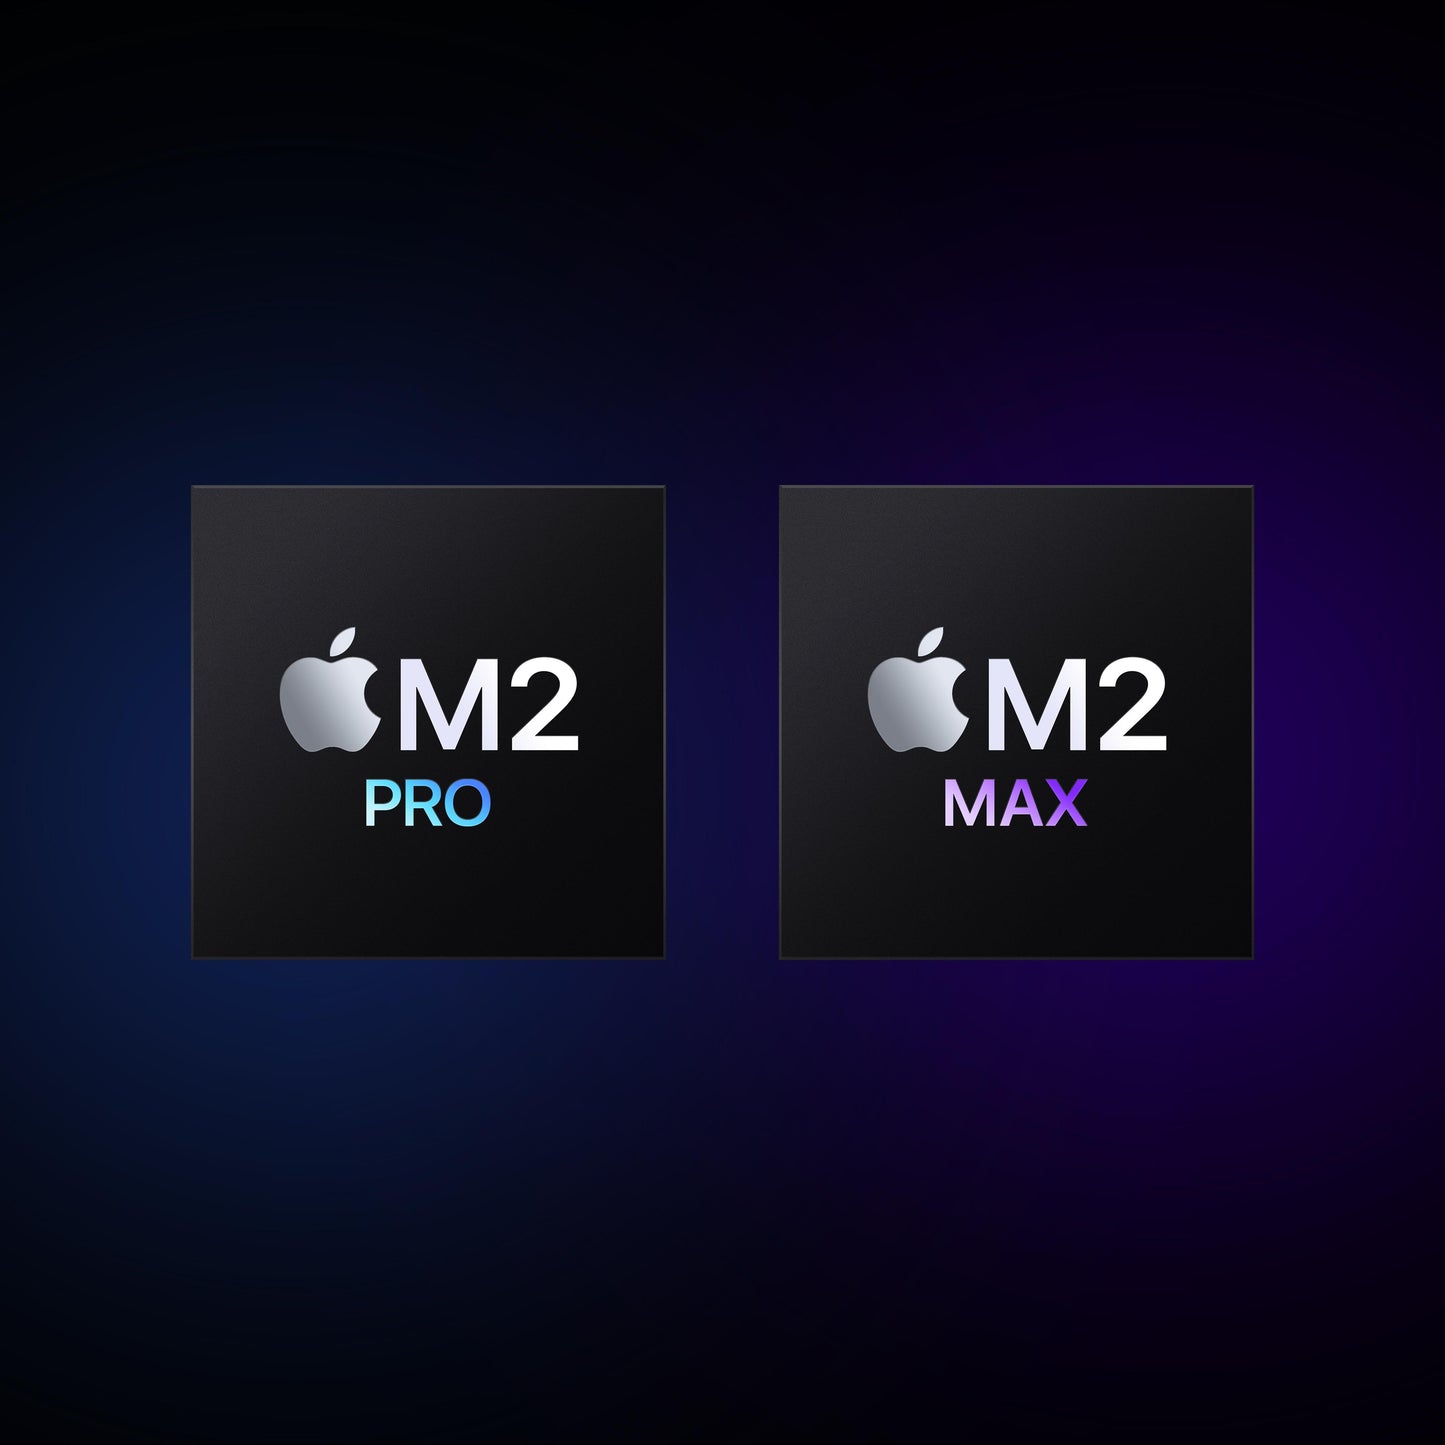 "16-inch MacBook Pro: Apple M2 Pro chip with 12-core CPU and 19-core GPU, 1TB SSD - Silver"